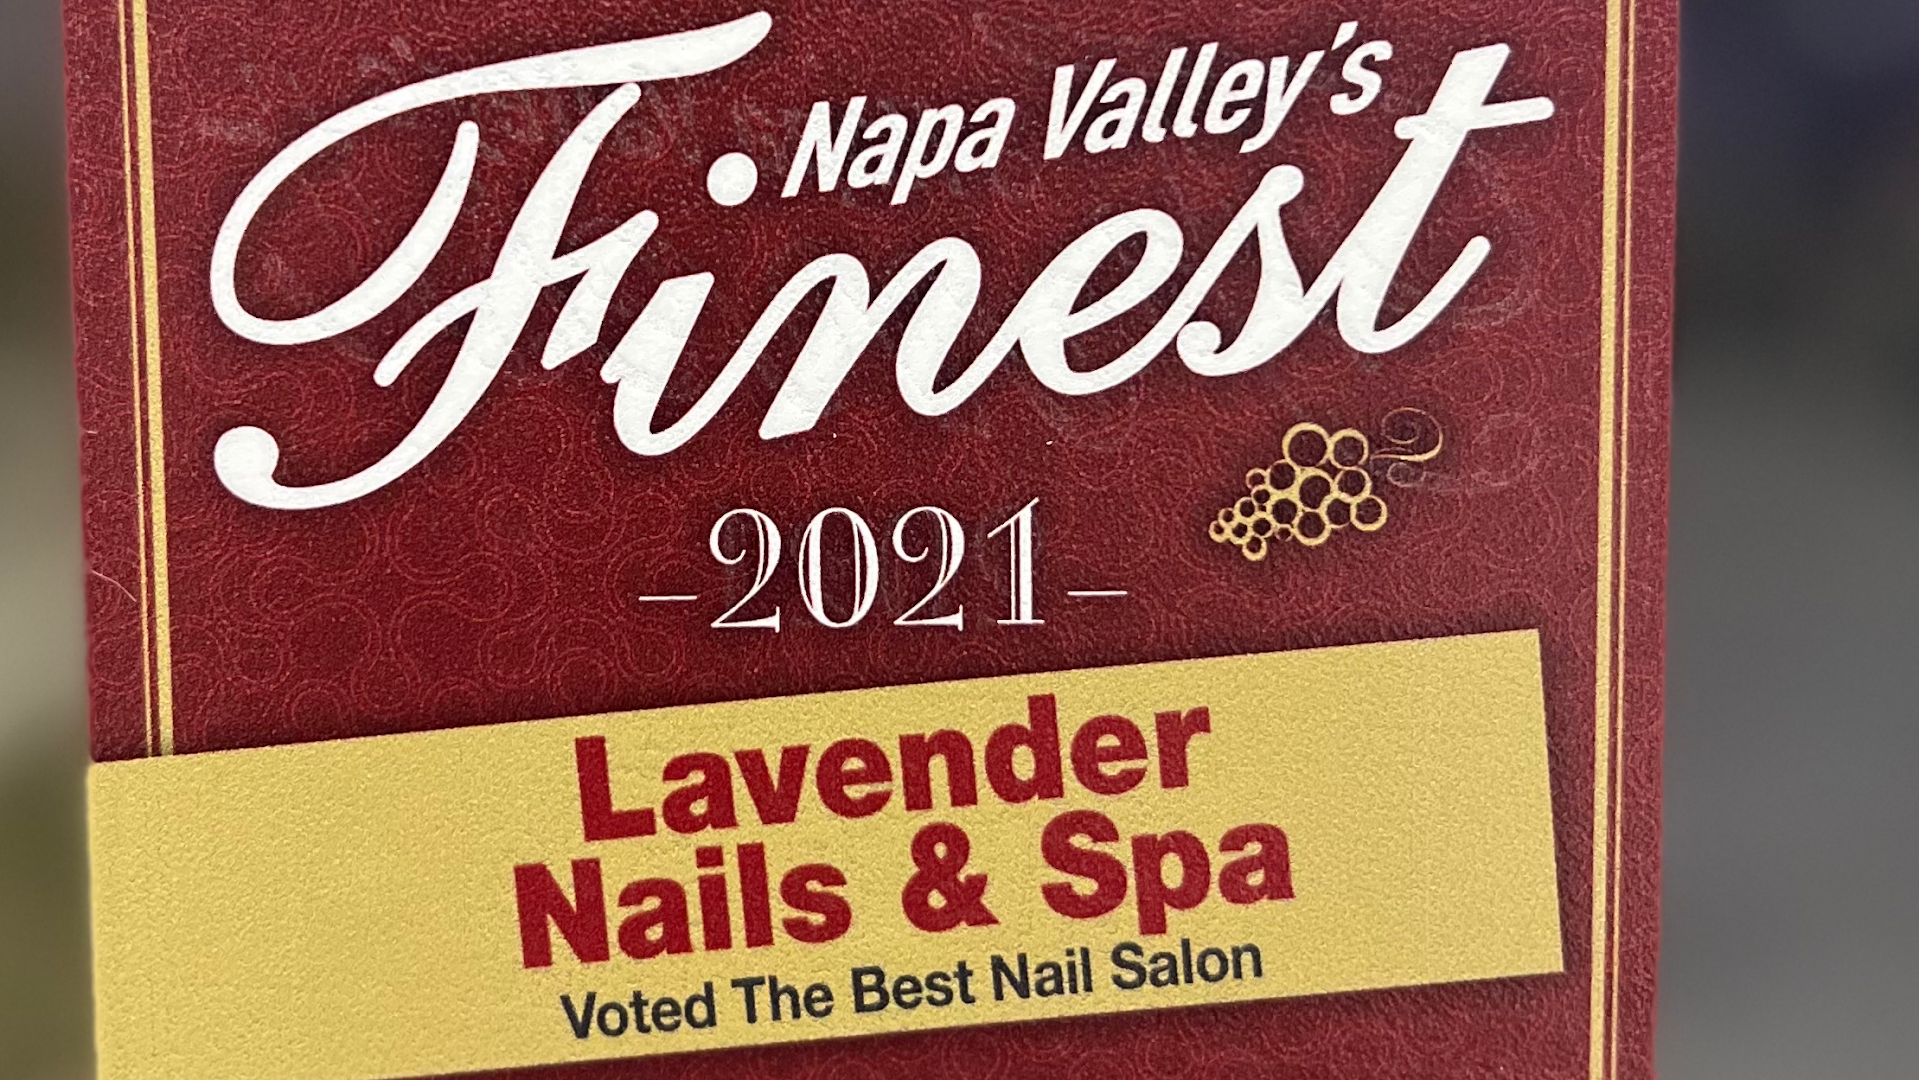 Lavender Nails & Spa